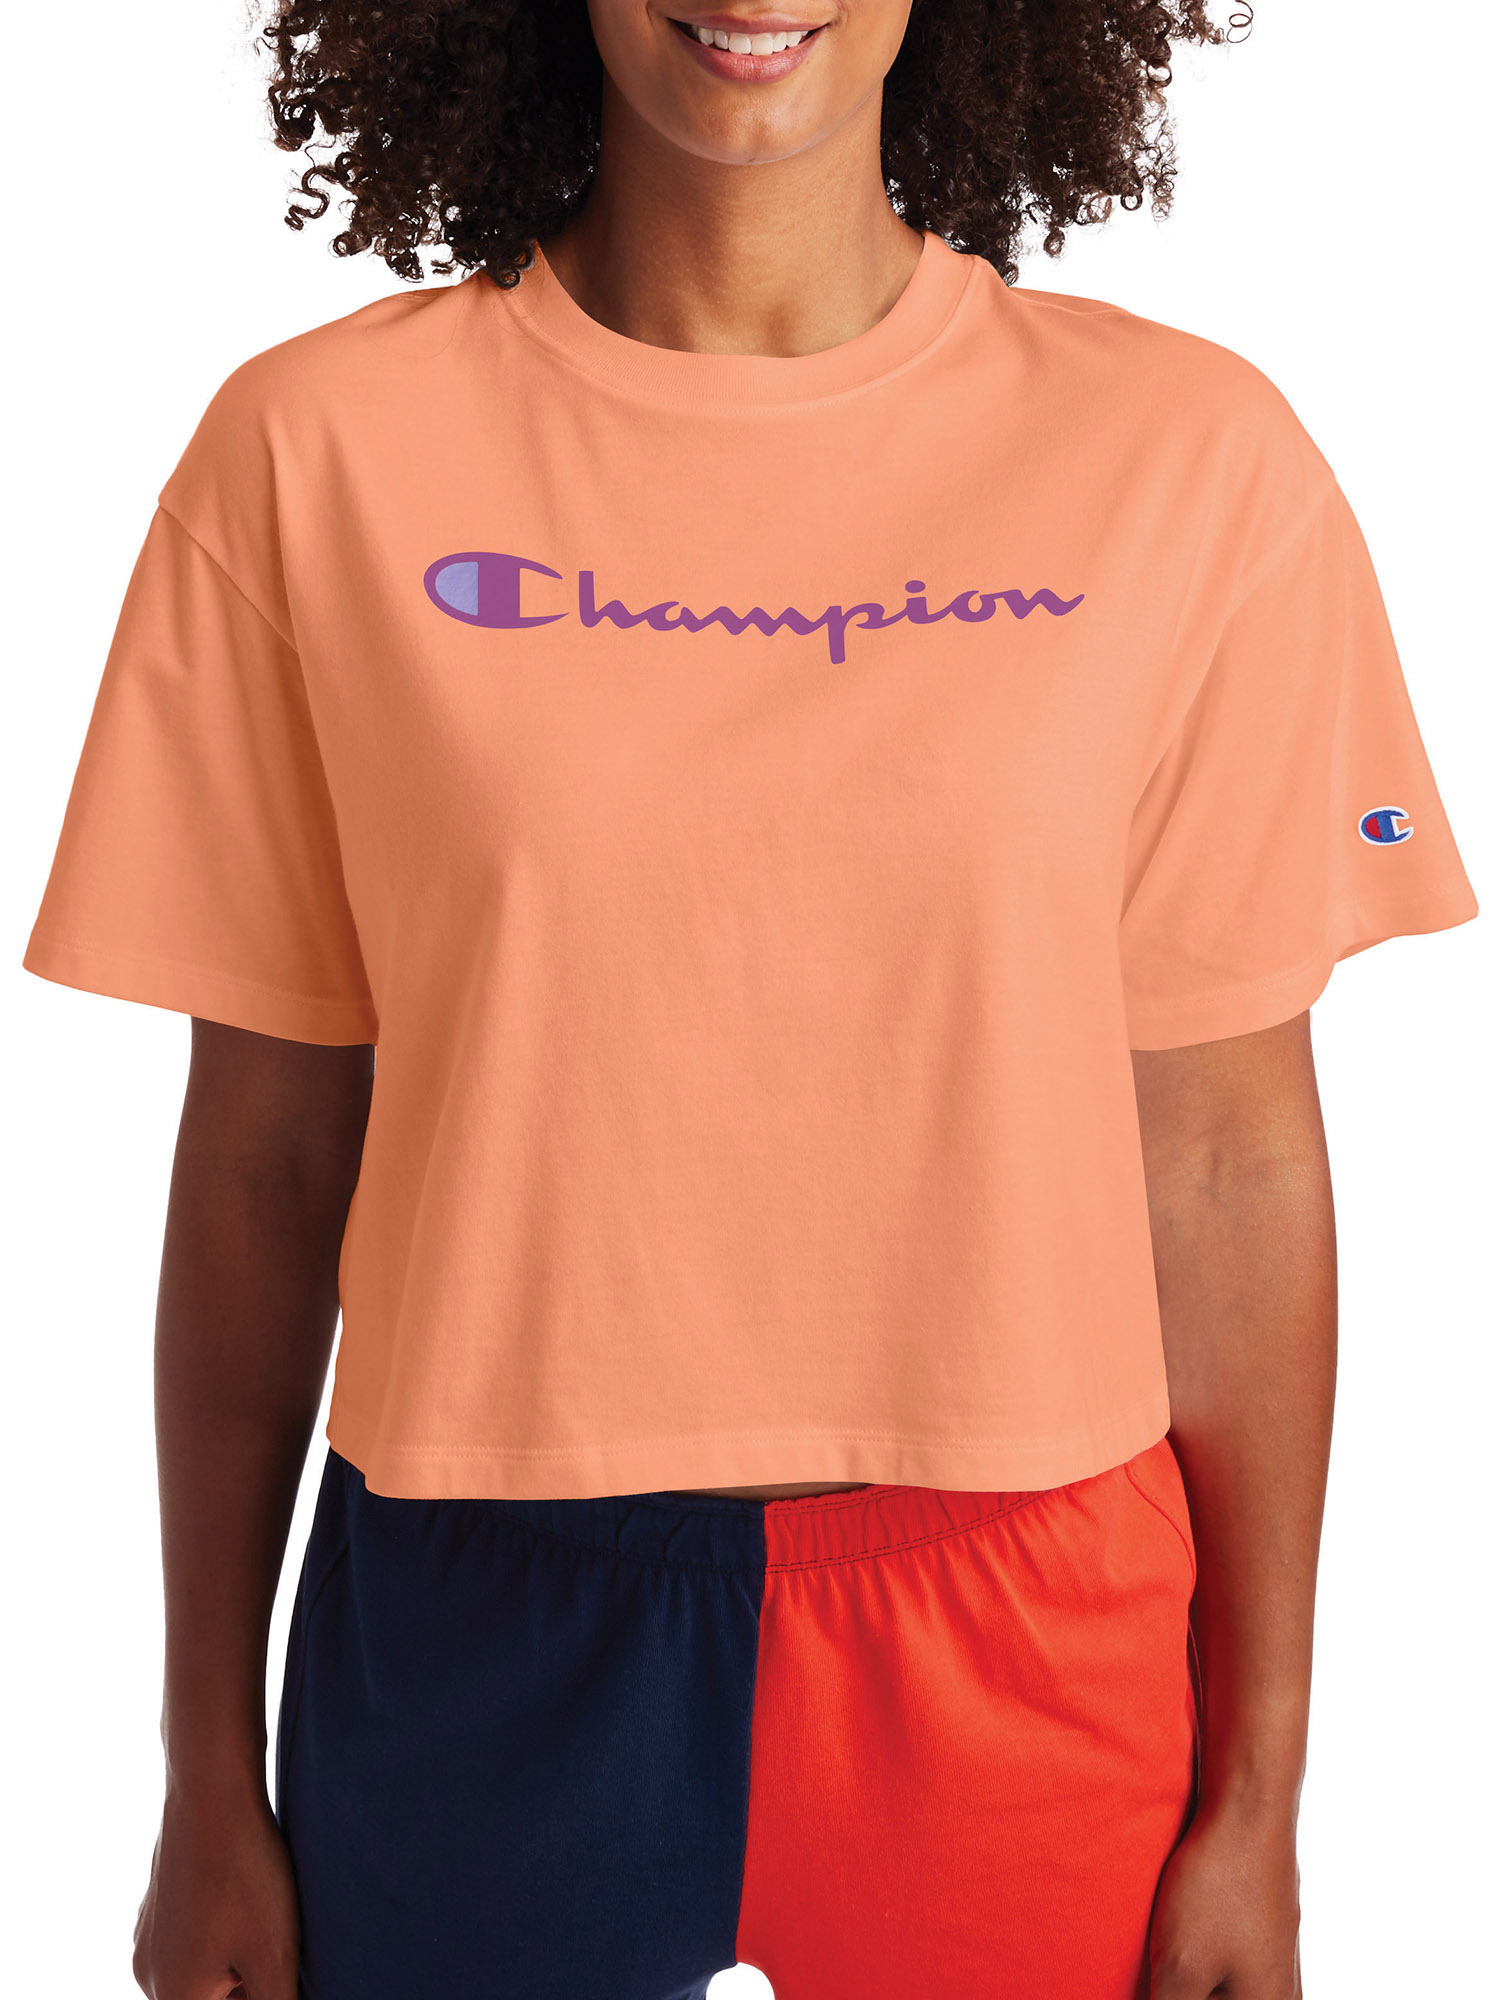 Champion Women’s Cropped T-Shirt - image 1 of 5